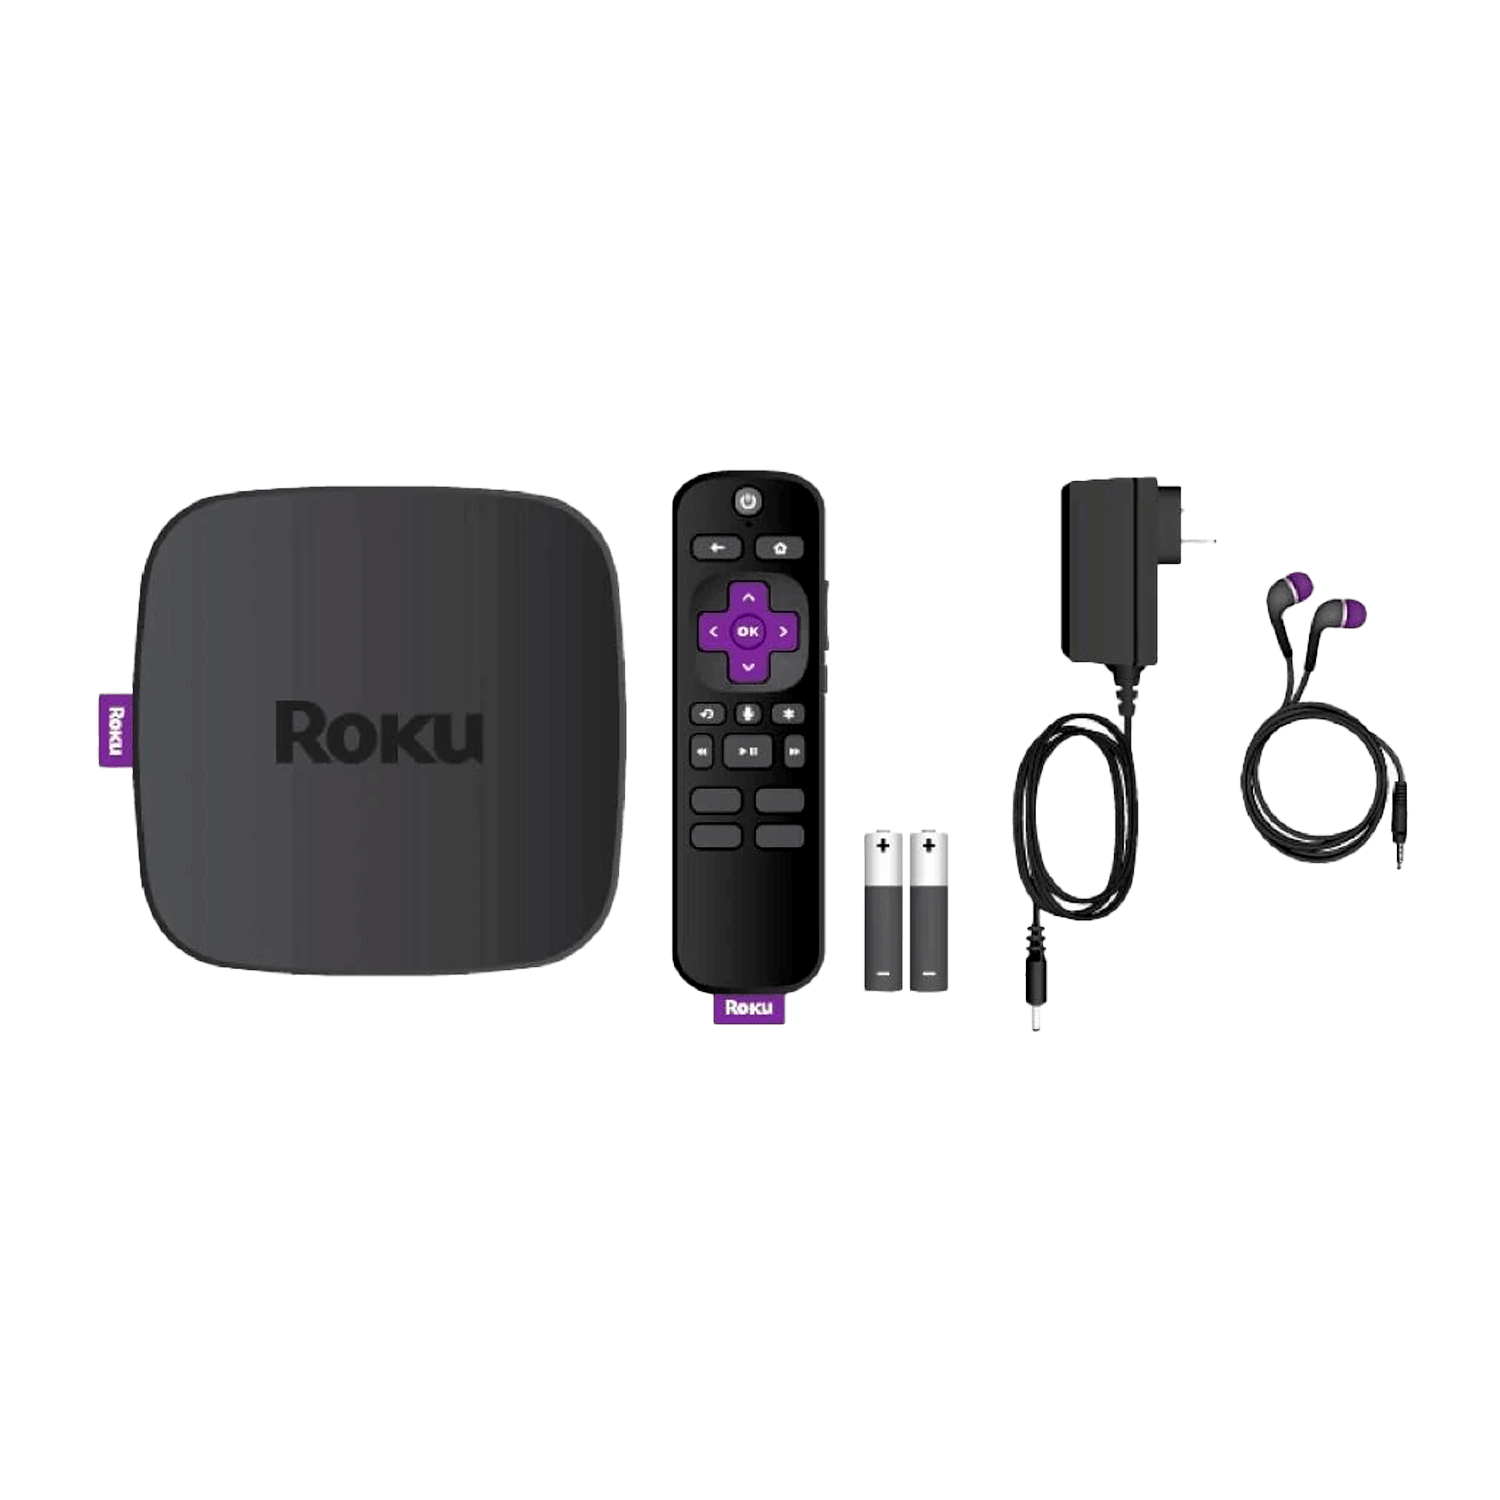 Media Player Roku Ultra LT Streaming HD / 4K / HDR - (4662RW)